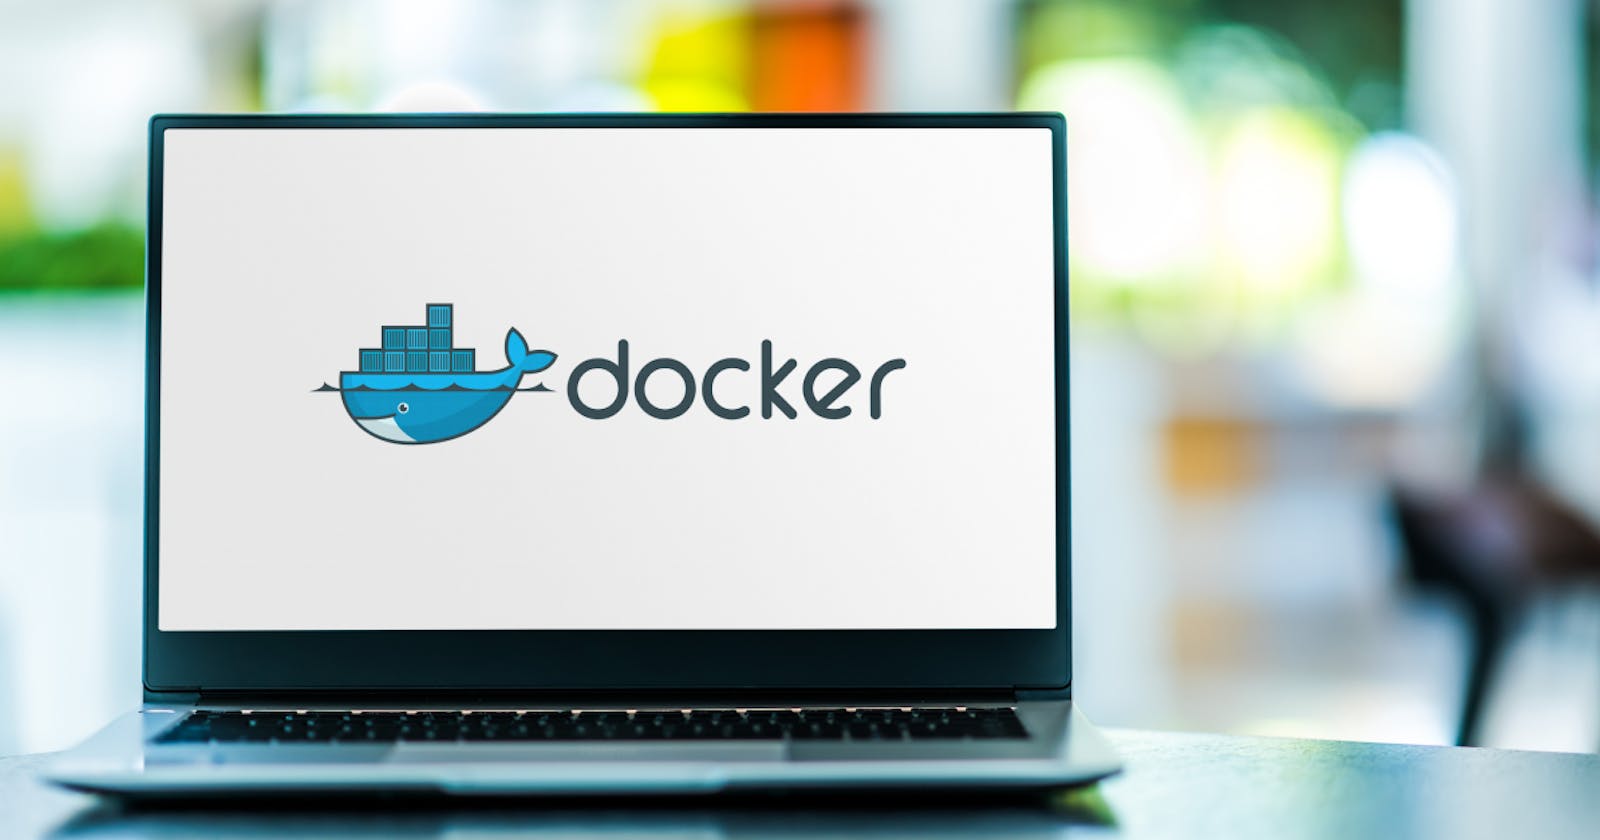 Docker Desktop Requires A Paid Subscription, Now What?